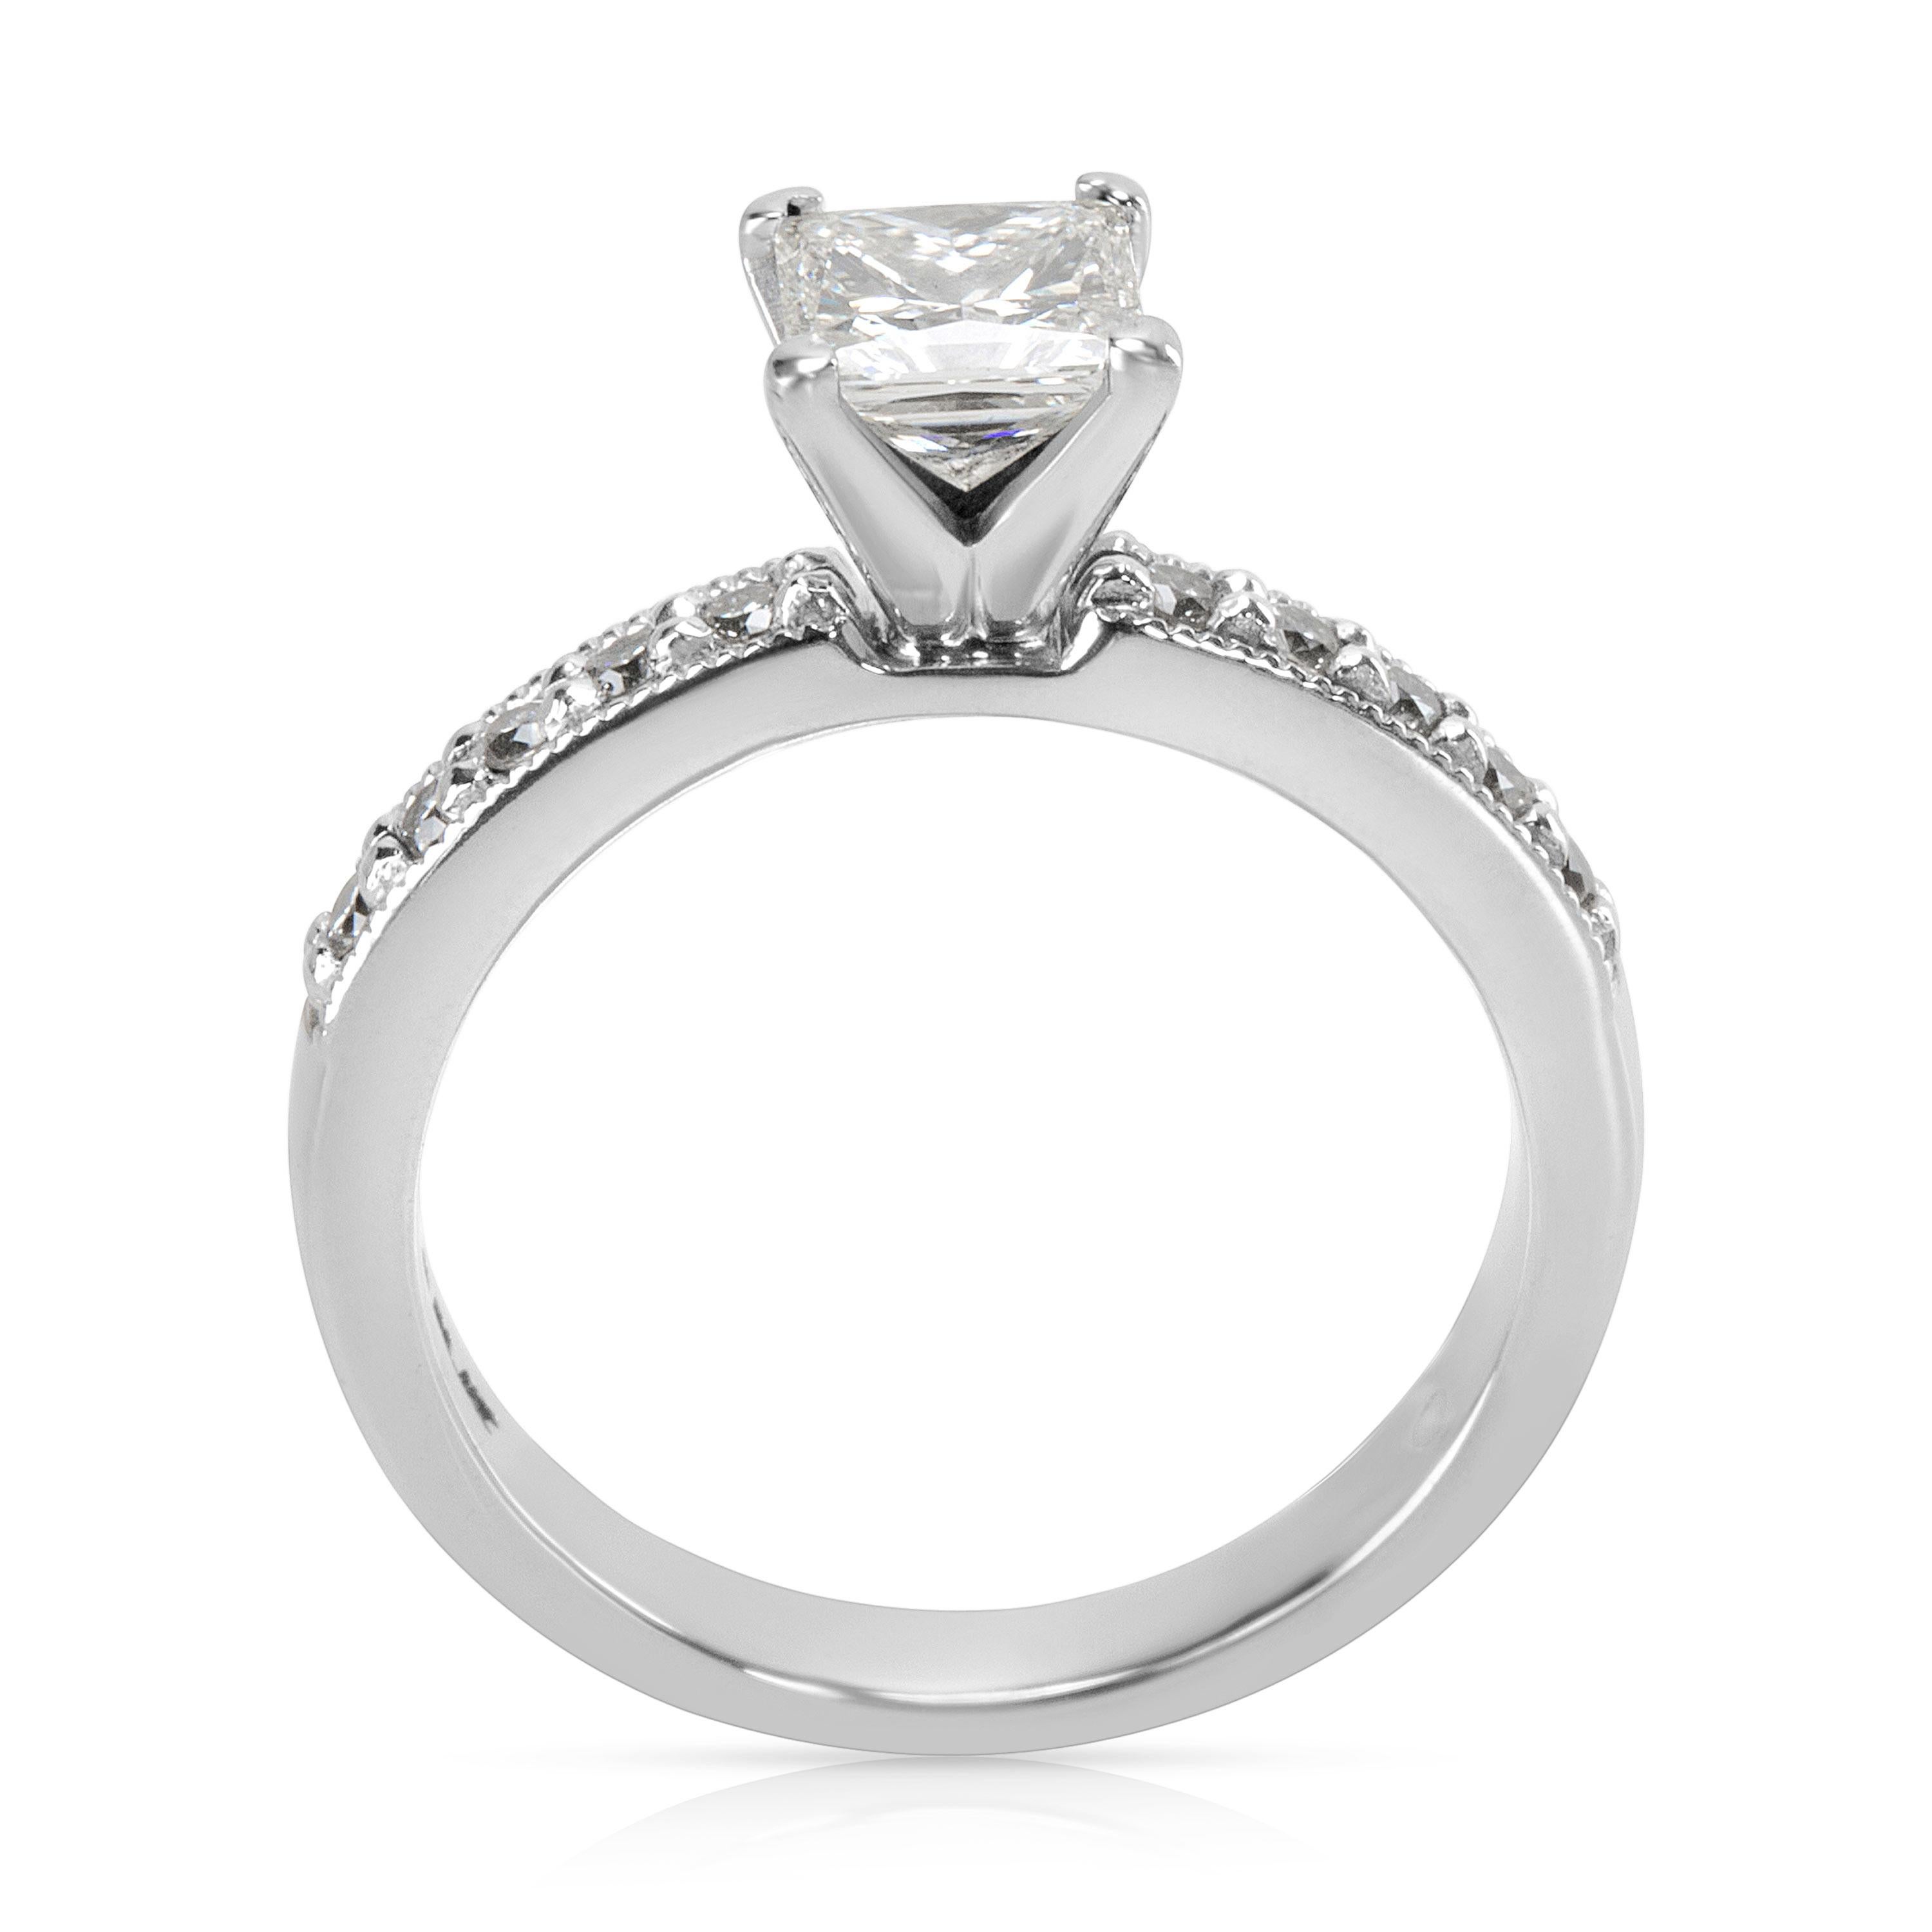 Princess Cut GIA Certified Princess Diamond Engagement Ring in Platinum 1.12 Carat Ring